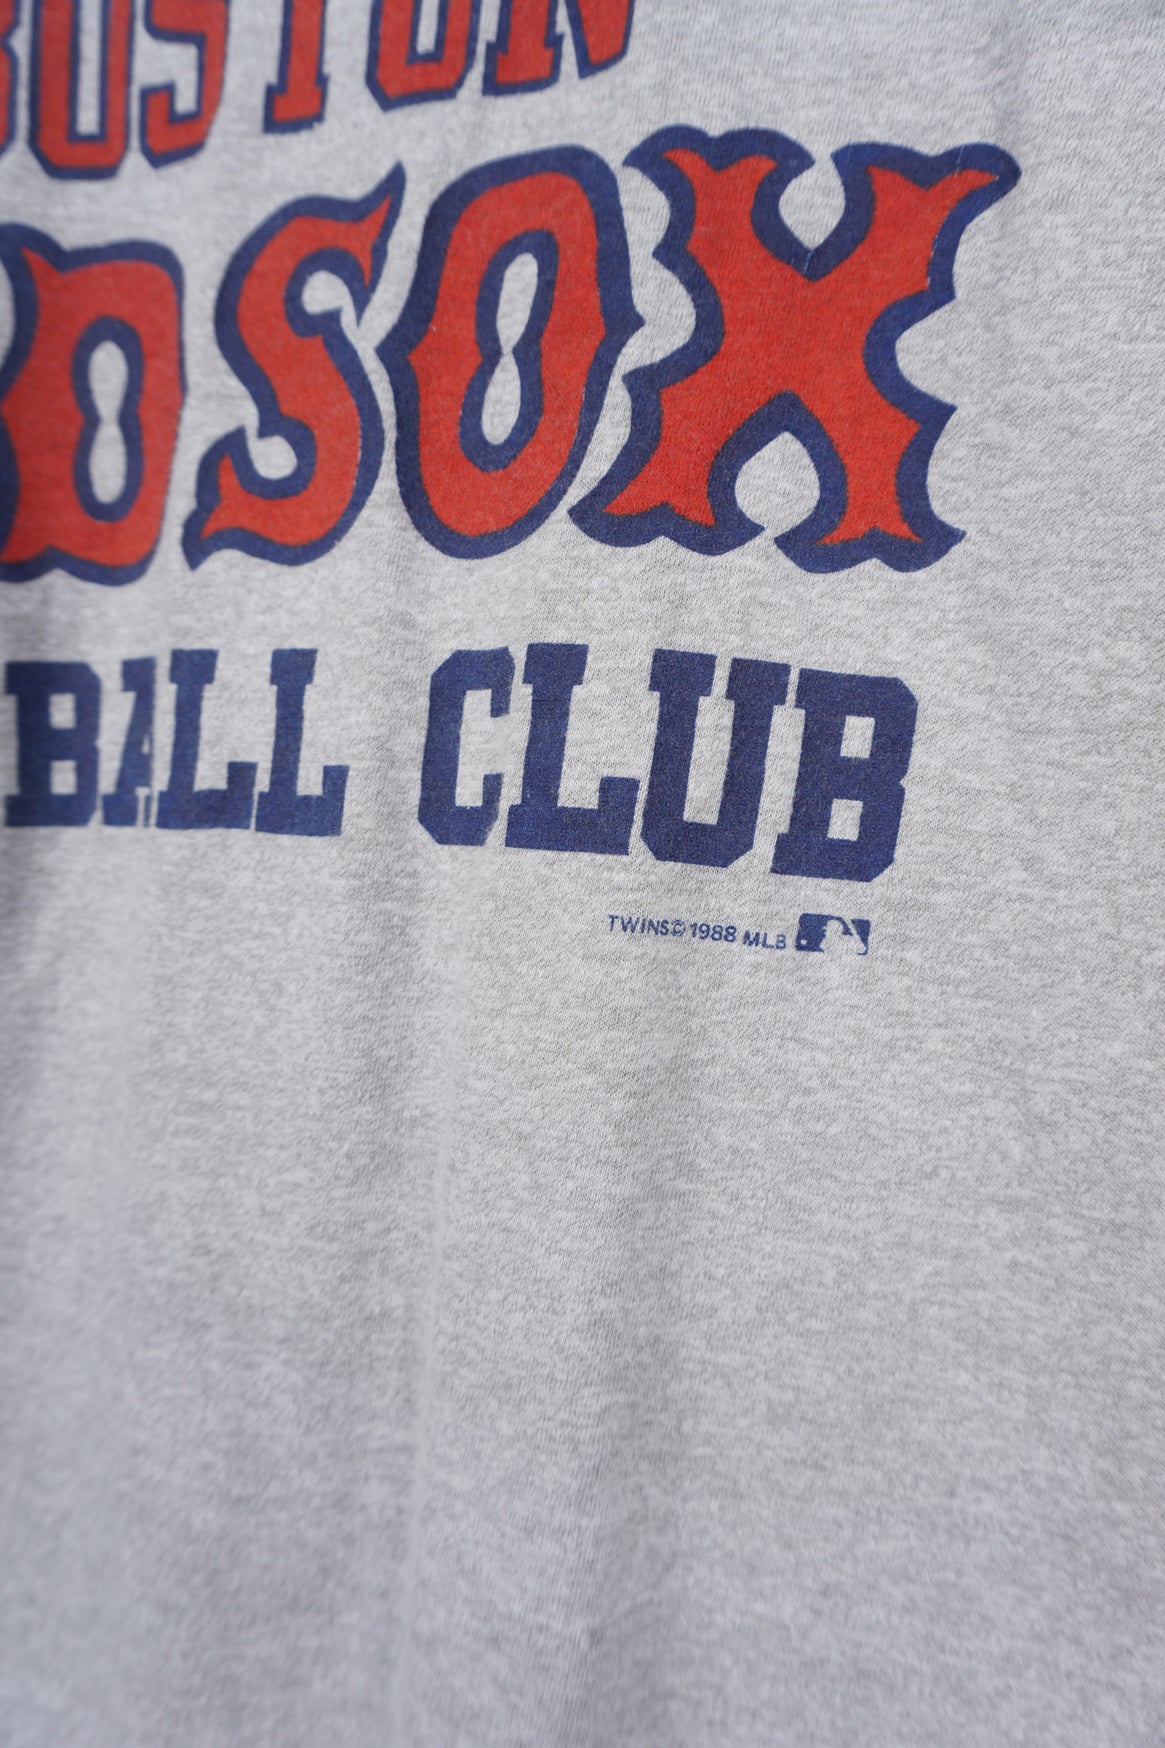 80s Vintage Boston Red Sox Property of Baseball Club T-shirt